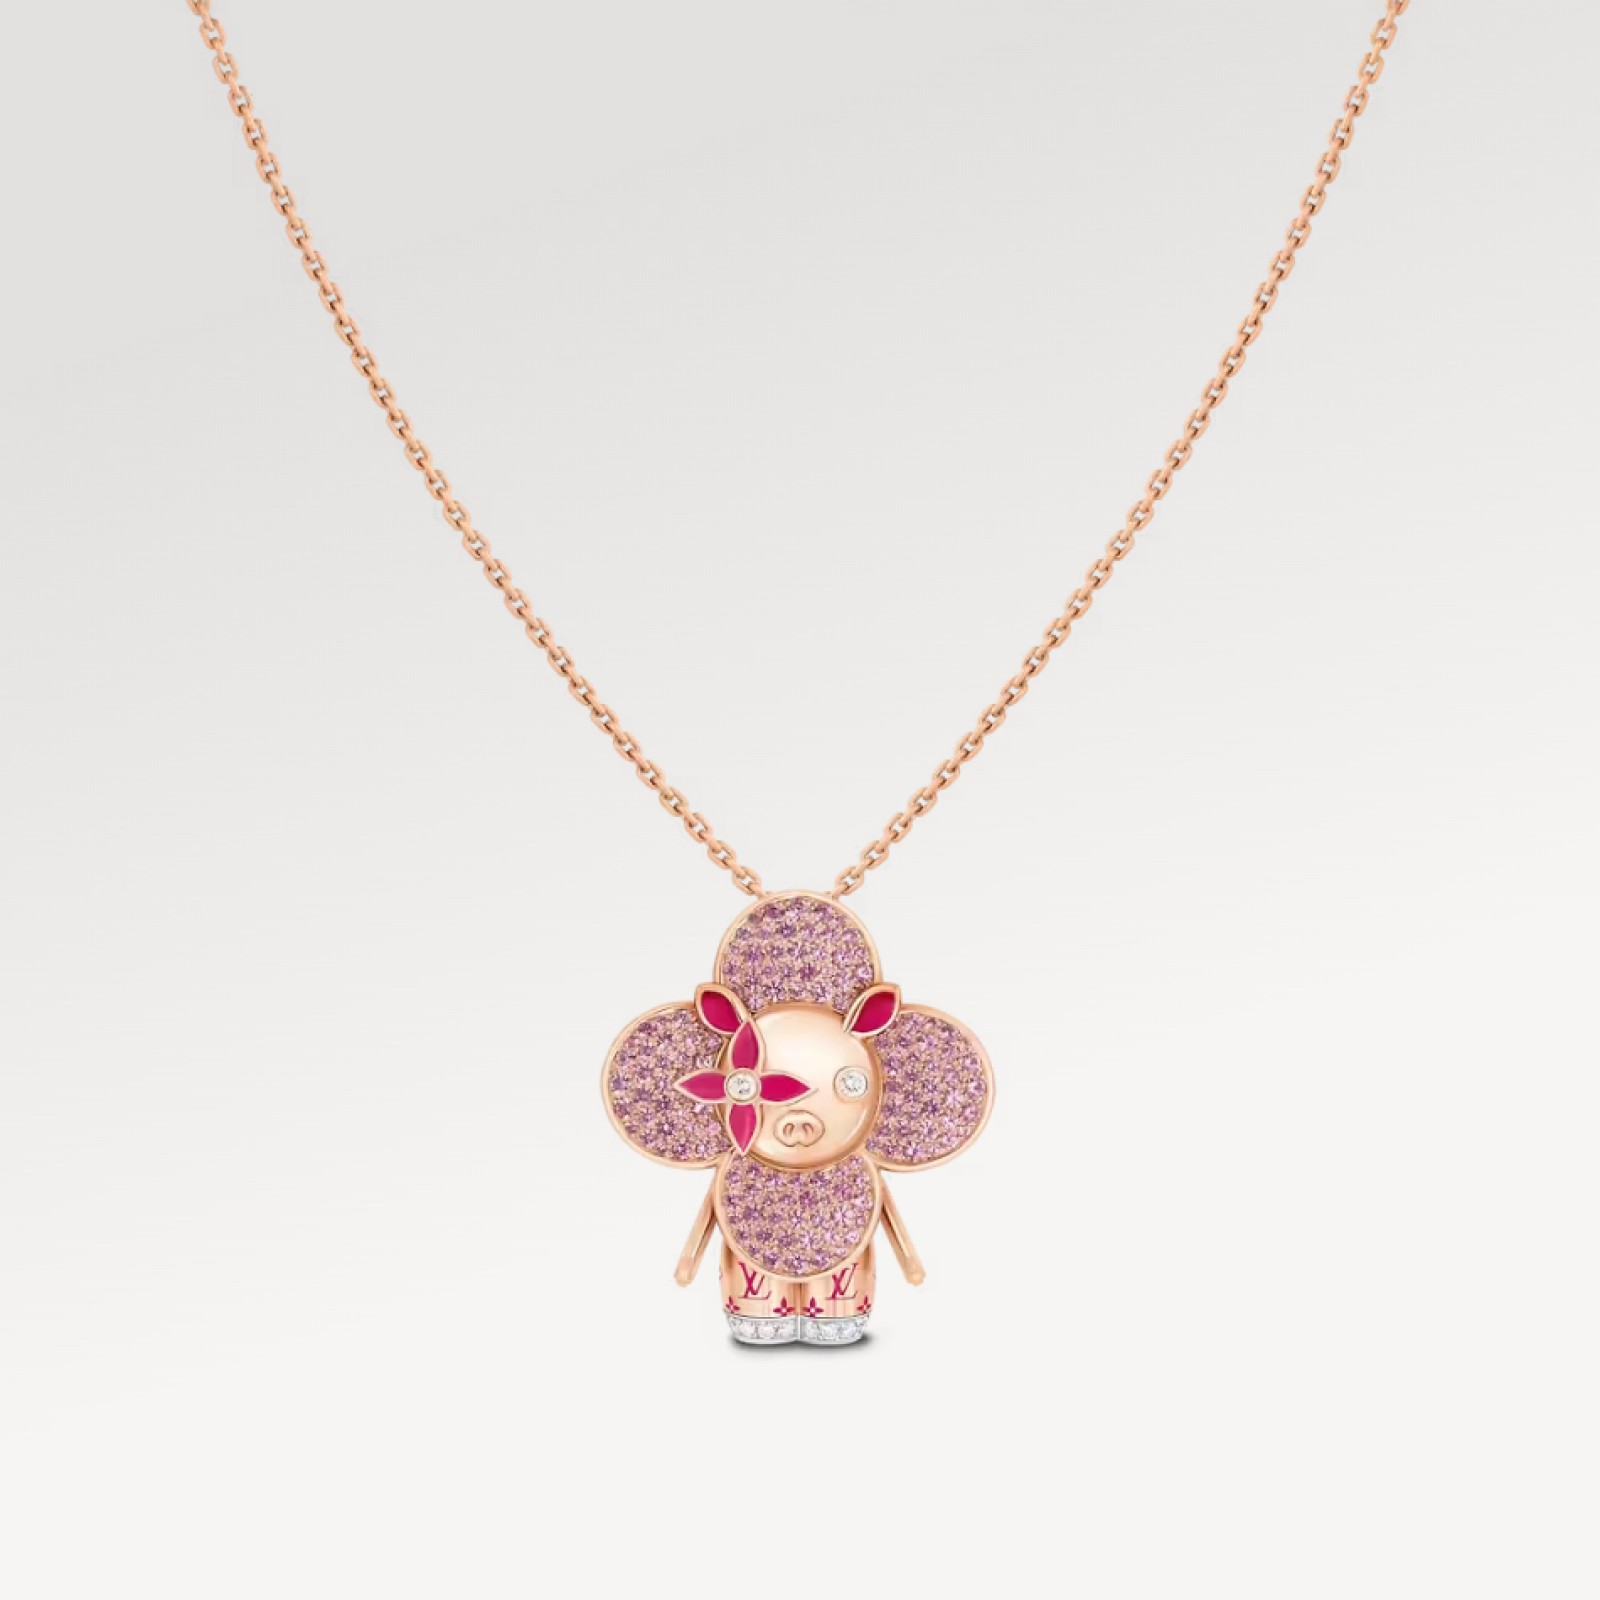 Vivienne Pig Pendant, Pink Gold, Lacquer, Diamonds & Colored Gemstones